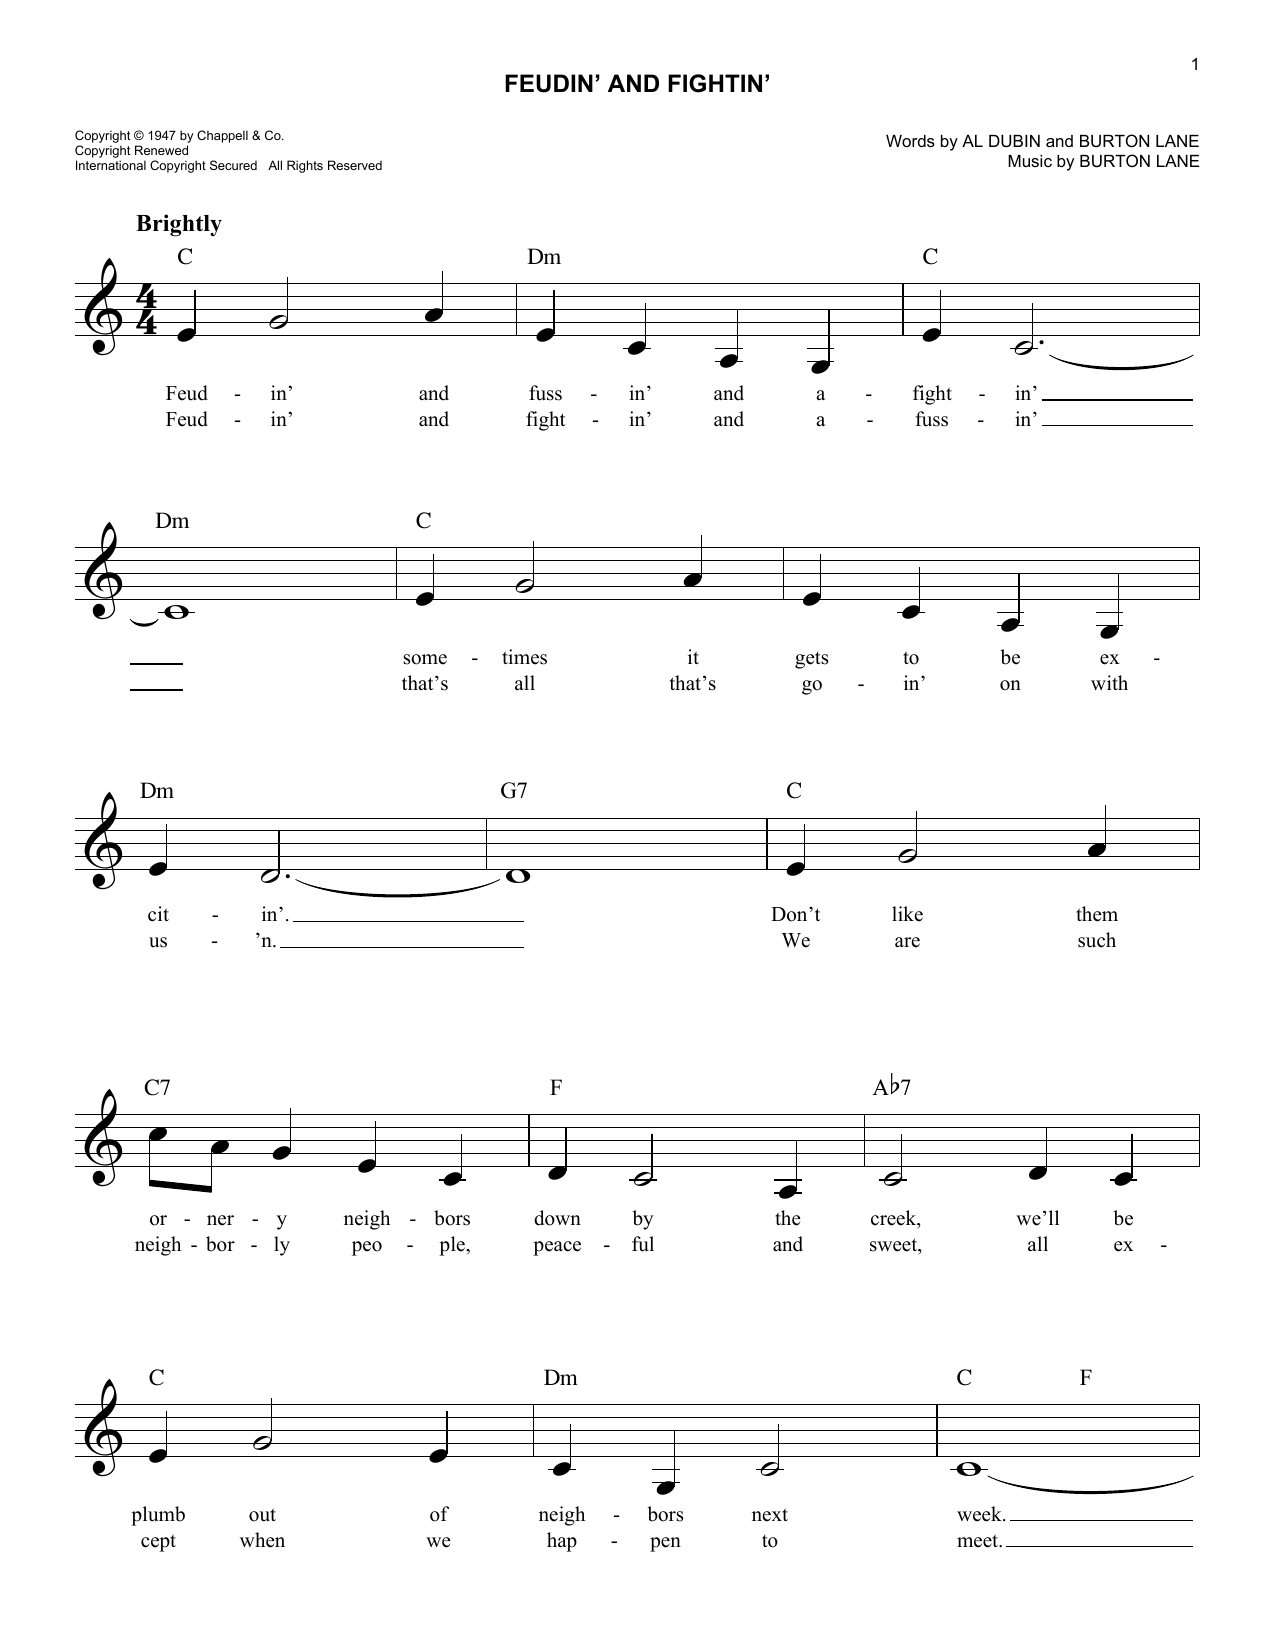 Burton Lane Feudin' And Fightin' Sheet Music Notes & Chords for Melody Line, Lyrics & Chords - Download or Print PDF